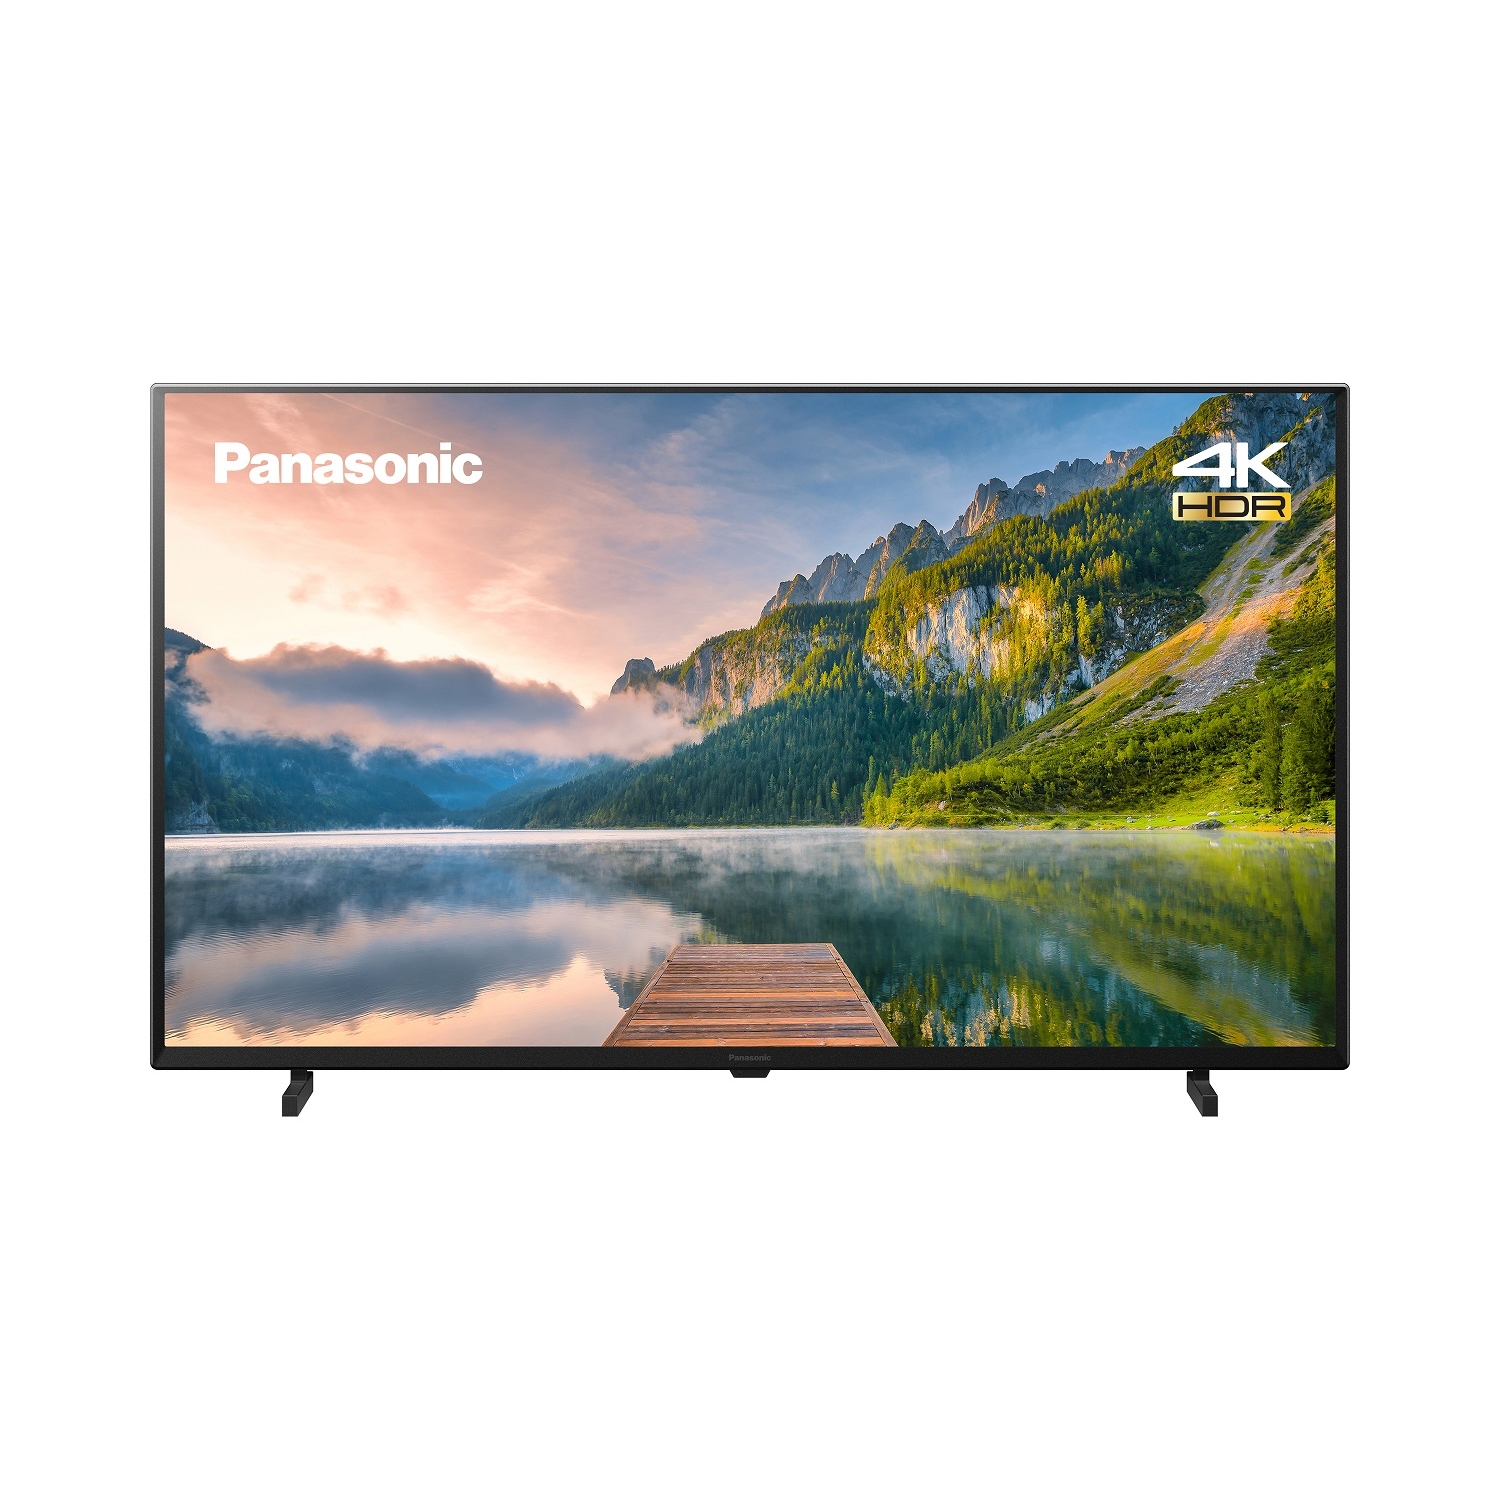 Panasonic 40" 4K LED Smart Android TV - 0